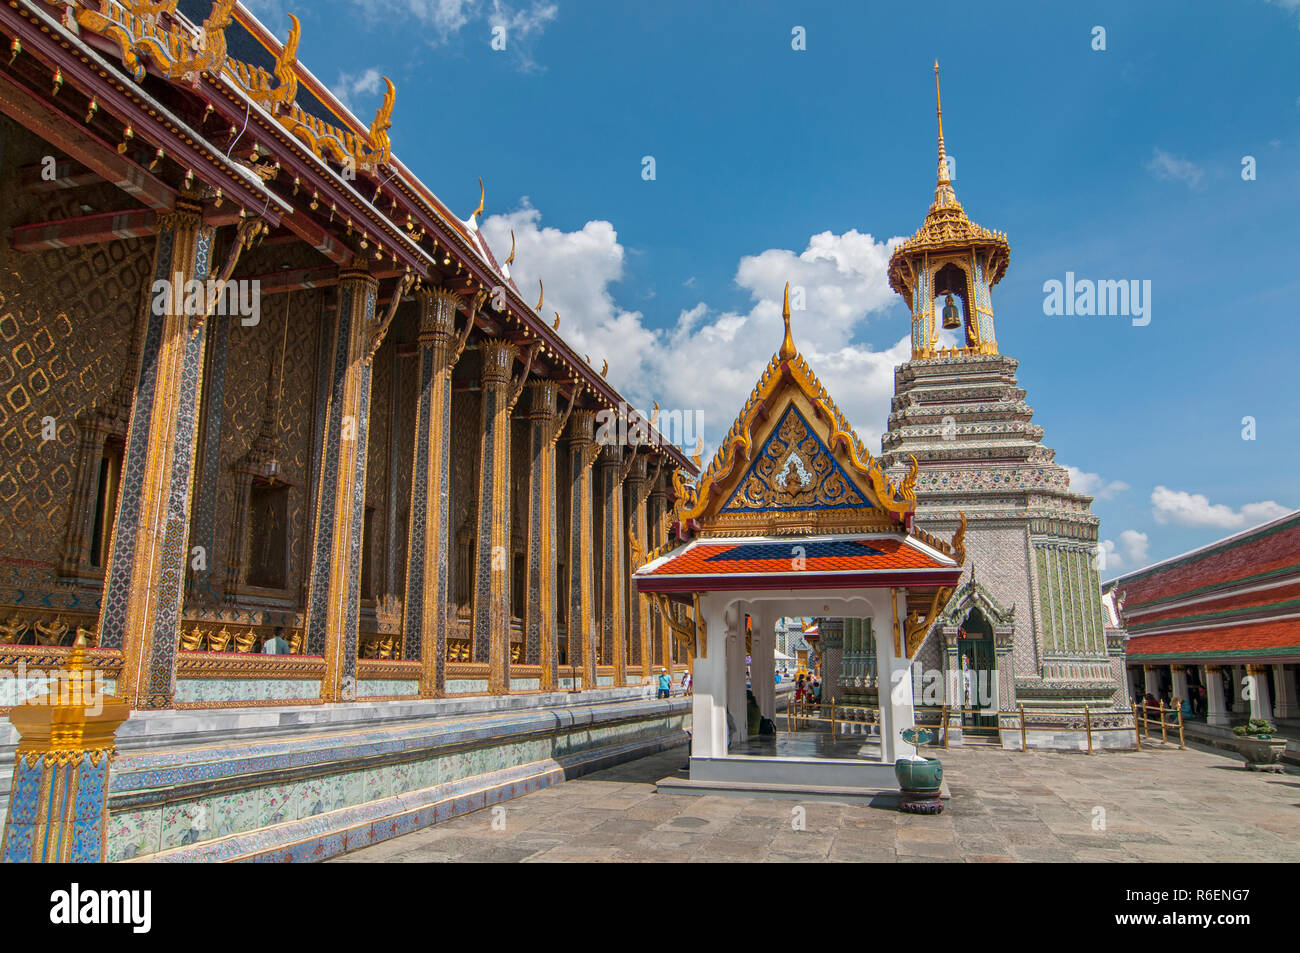 Phra Ubosot At The Temple Of The Emerald Buddha (Wat Phra Kaew), Grand Palace Complex, Bangkok, Thailand Stock Photo